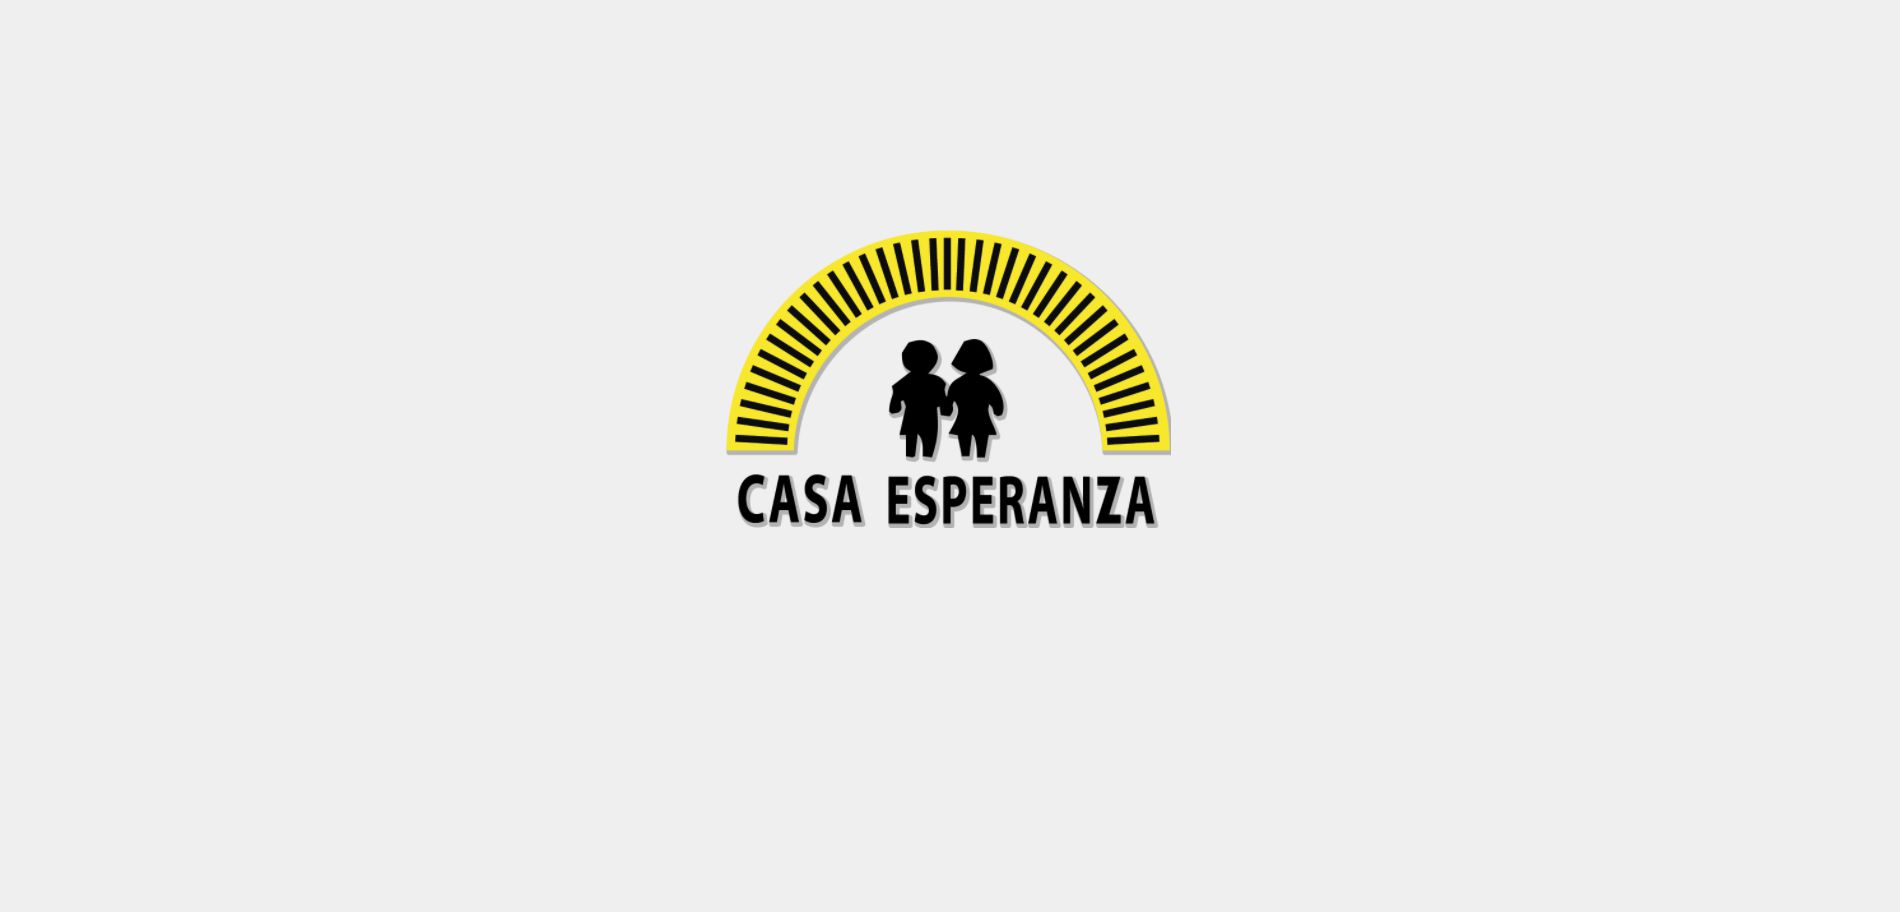 Visit to Casa Esperanza